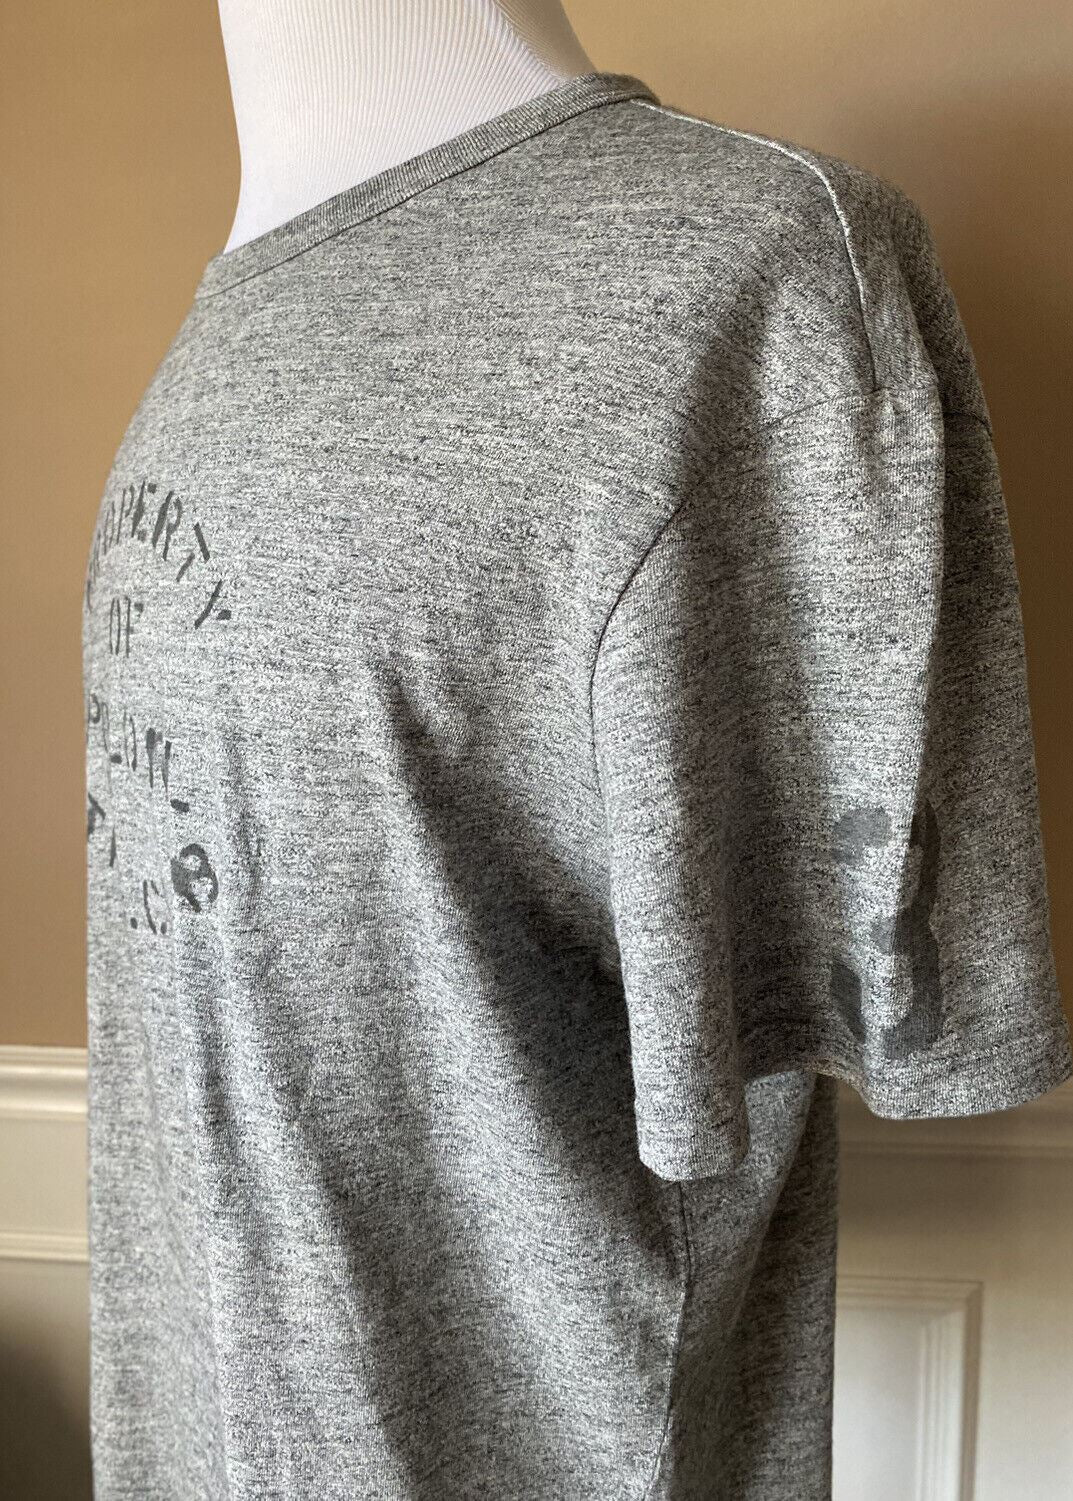 NWT $69.50 Polo Ralph Lauren Gray Athletic Soft Cotton Logo T-Shirt Large